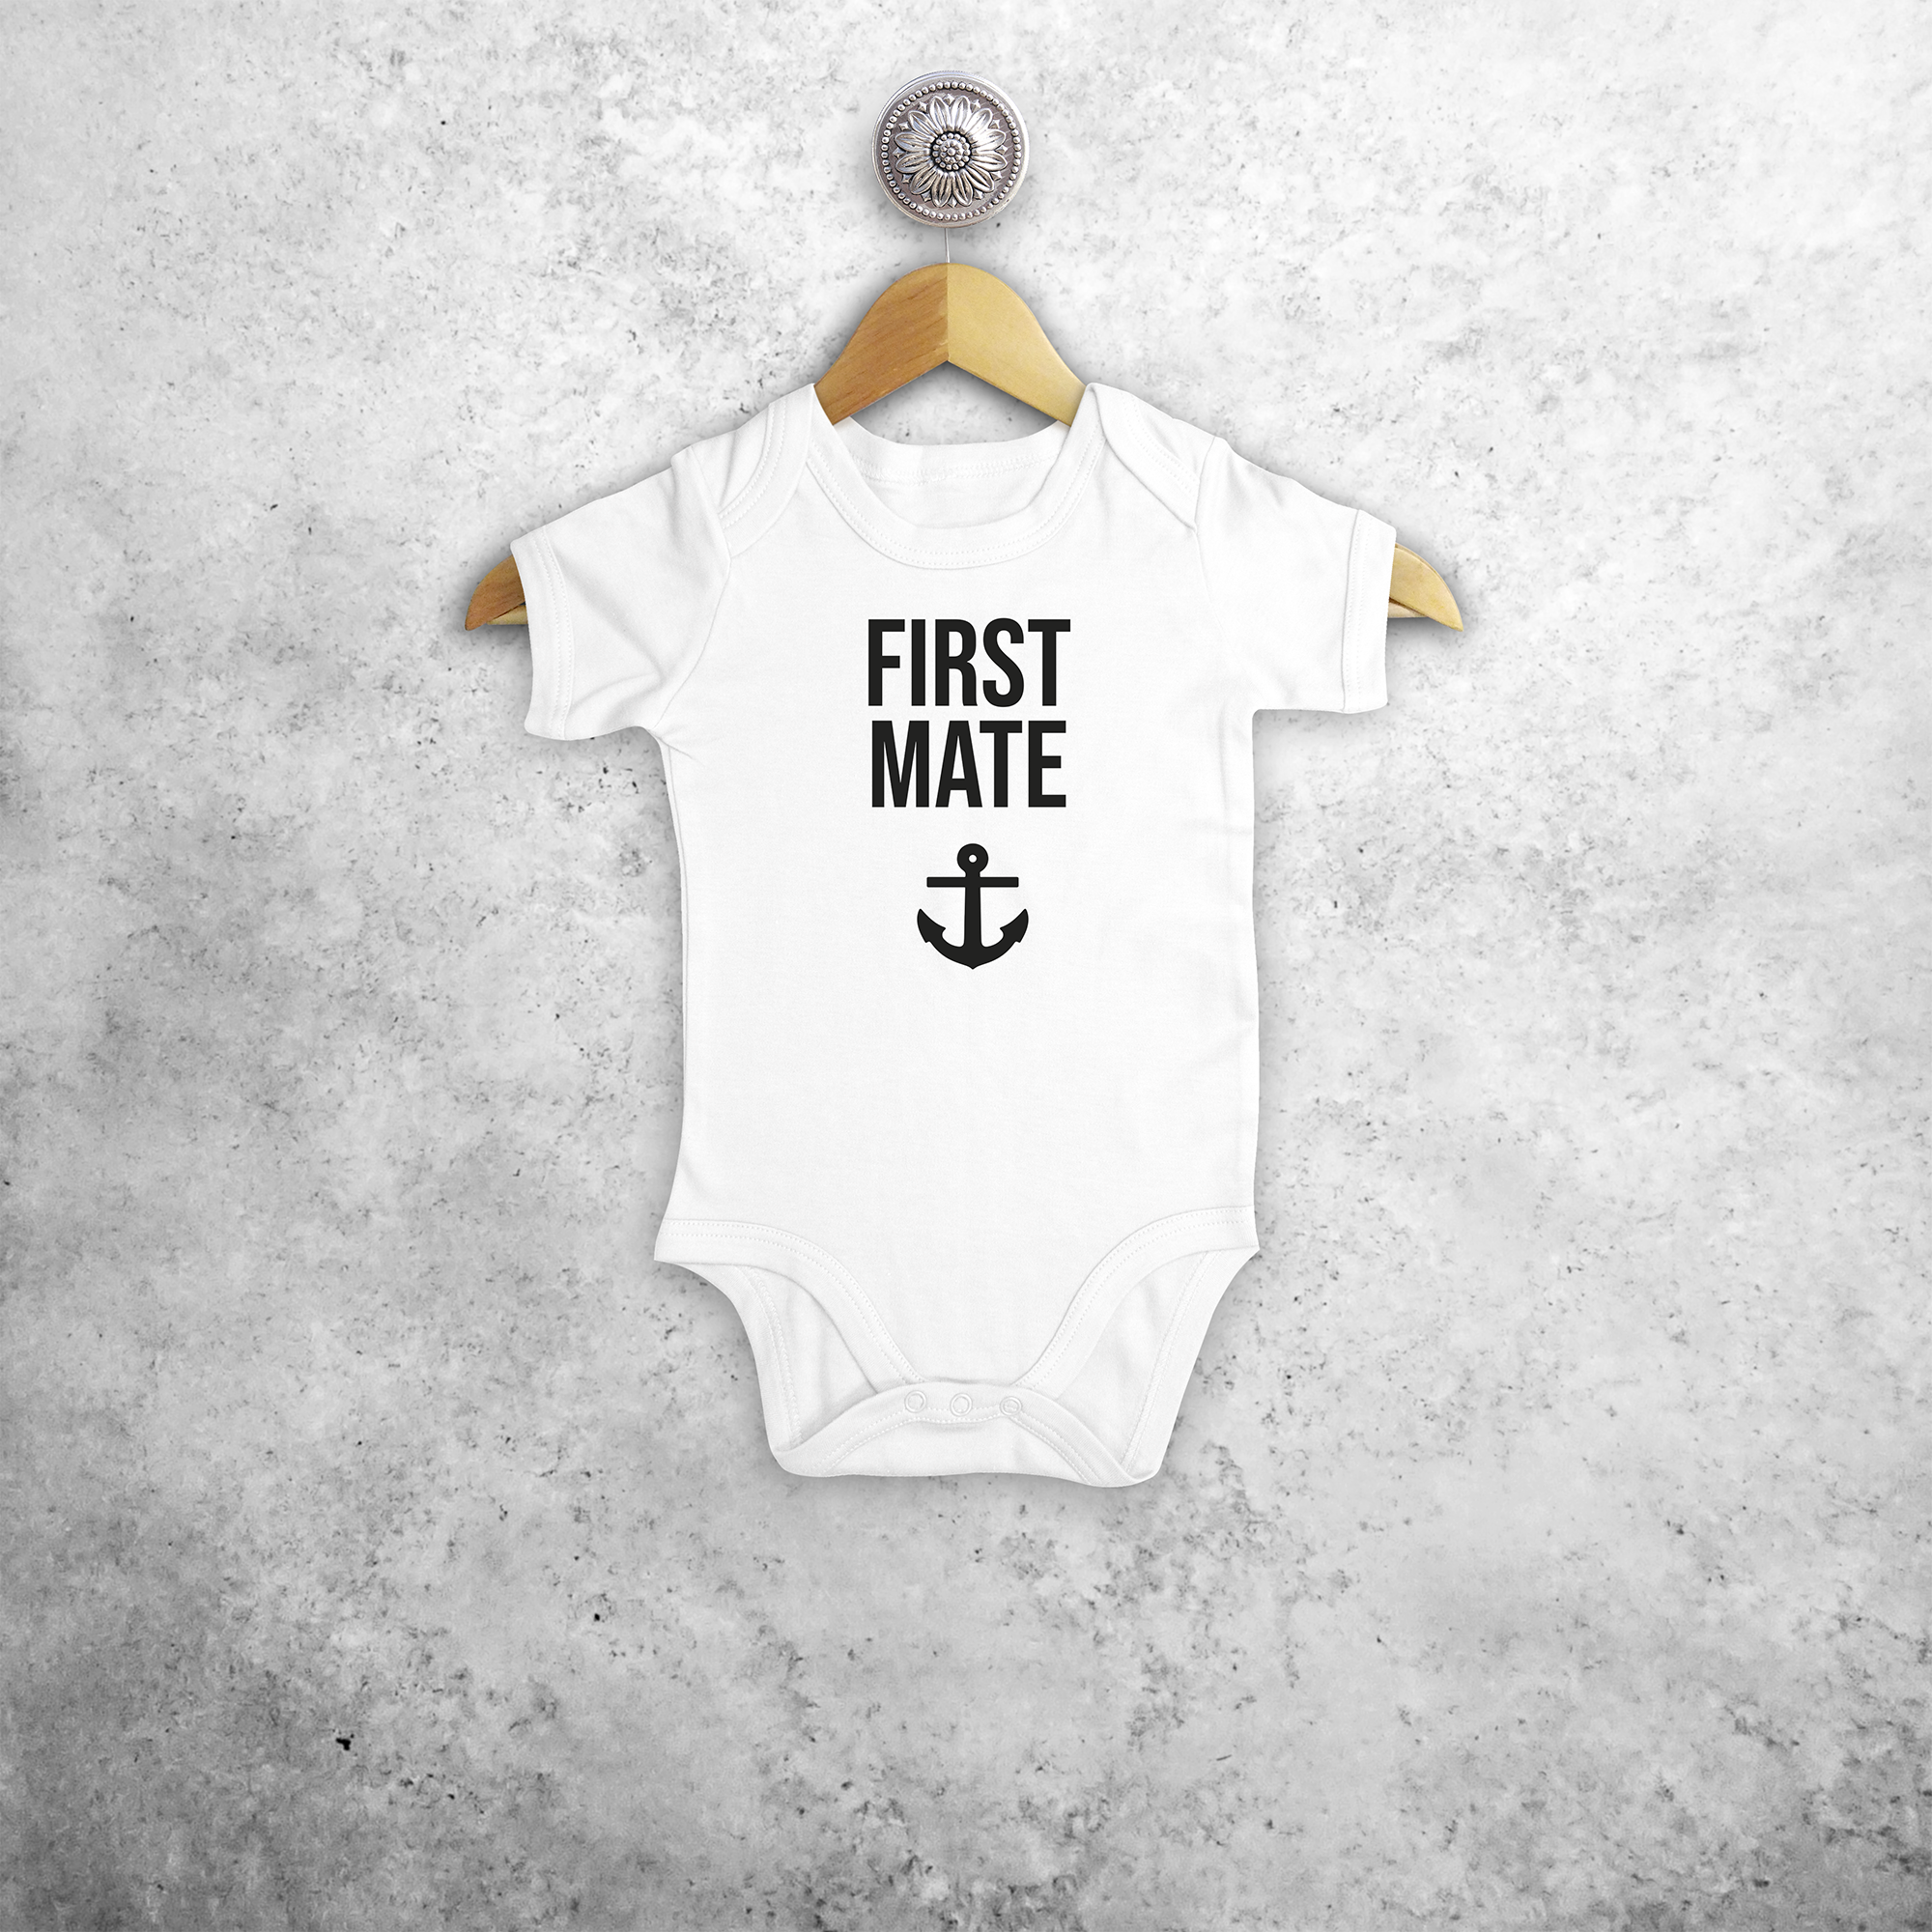 'First mate' baby shortsleeve bodysuit